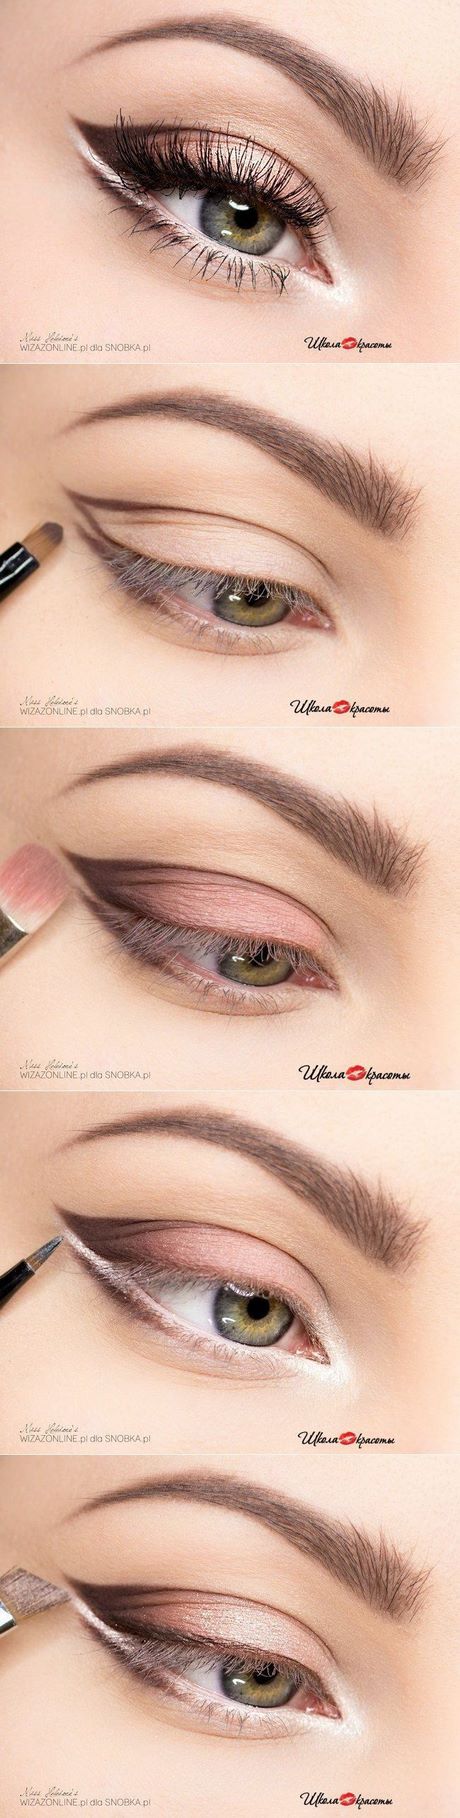 lisa-pullano-makeup-tutorial-45_14 Lisa pullano make-up tutorial